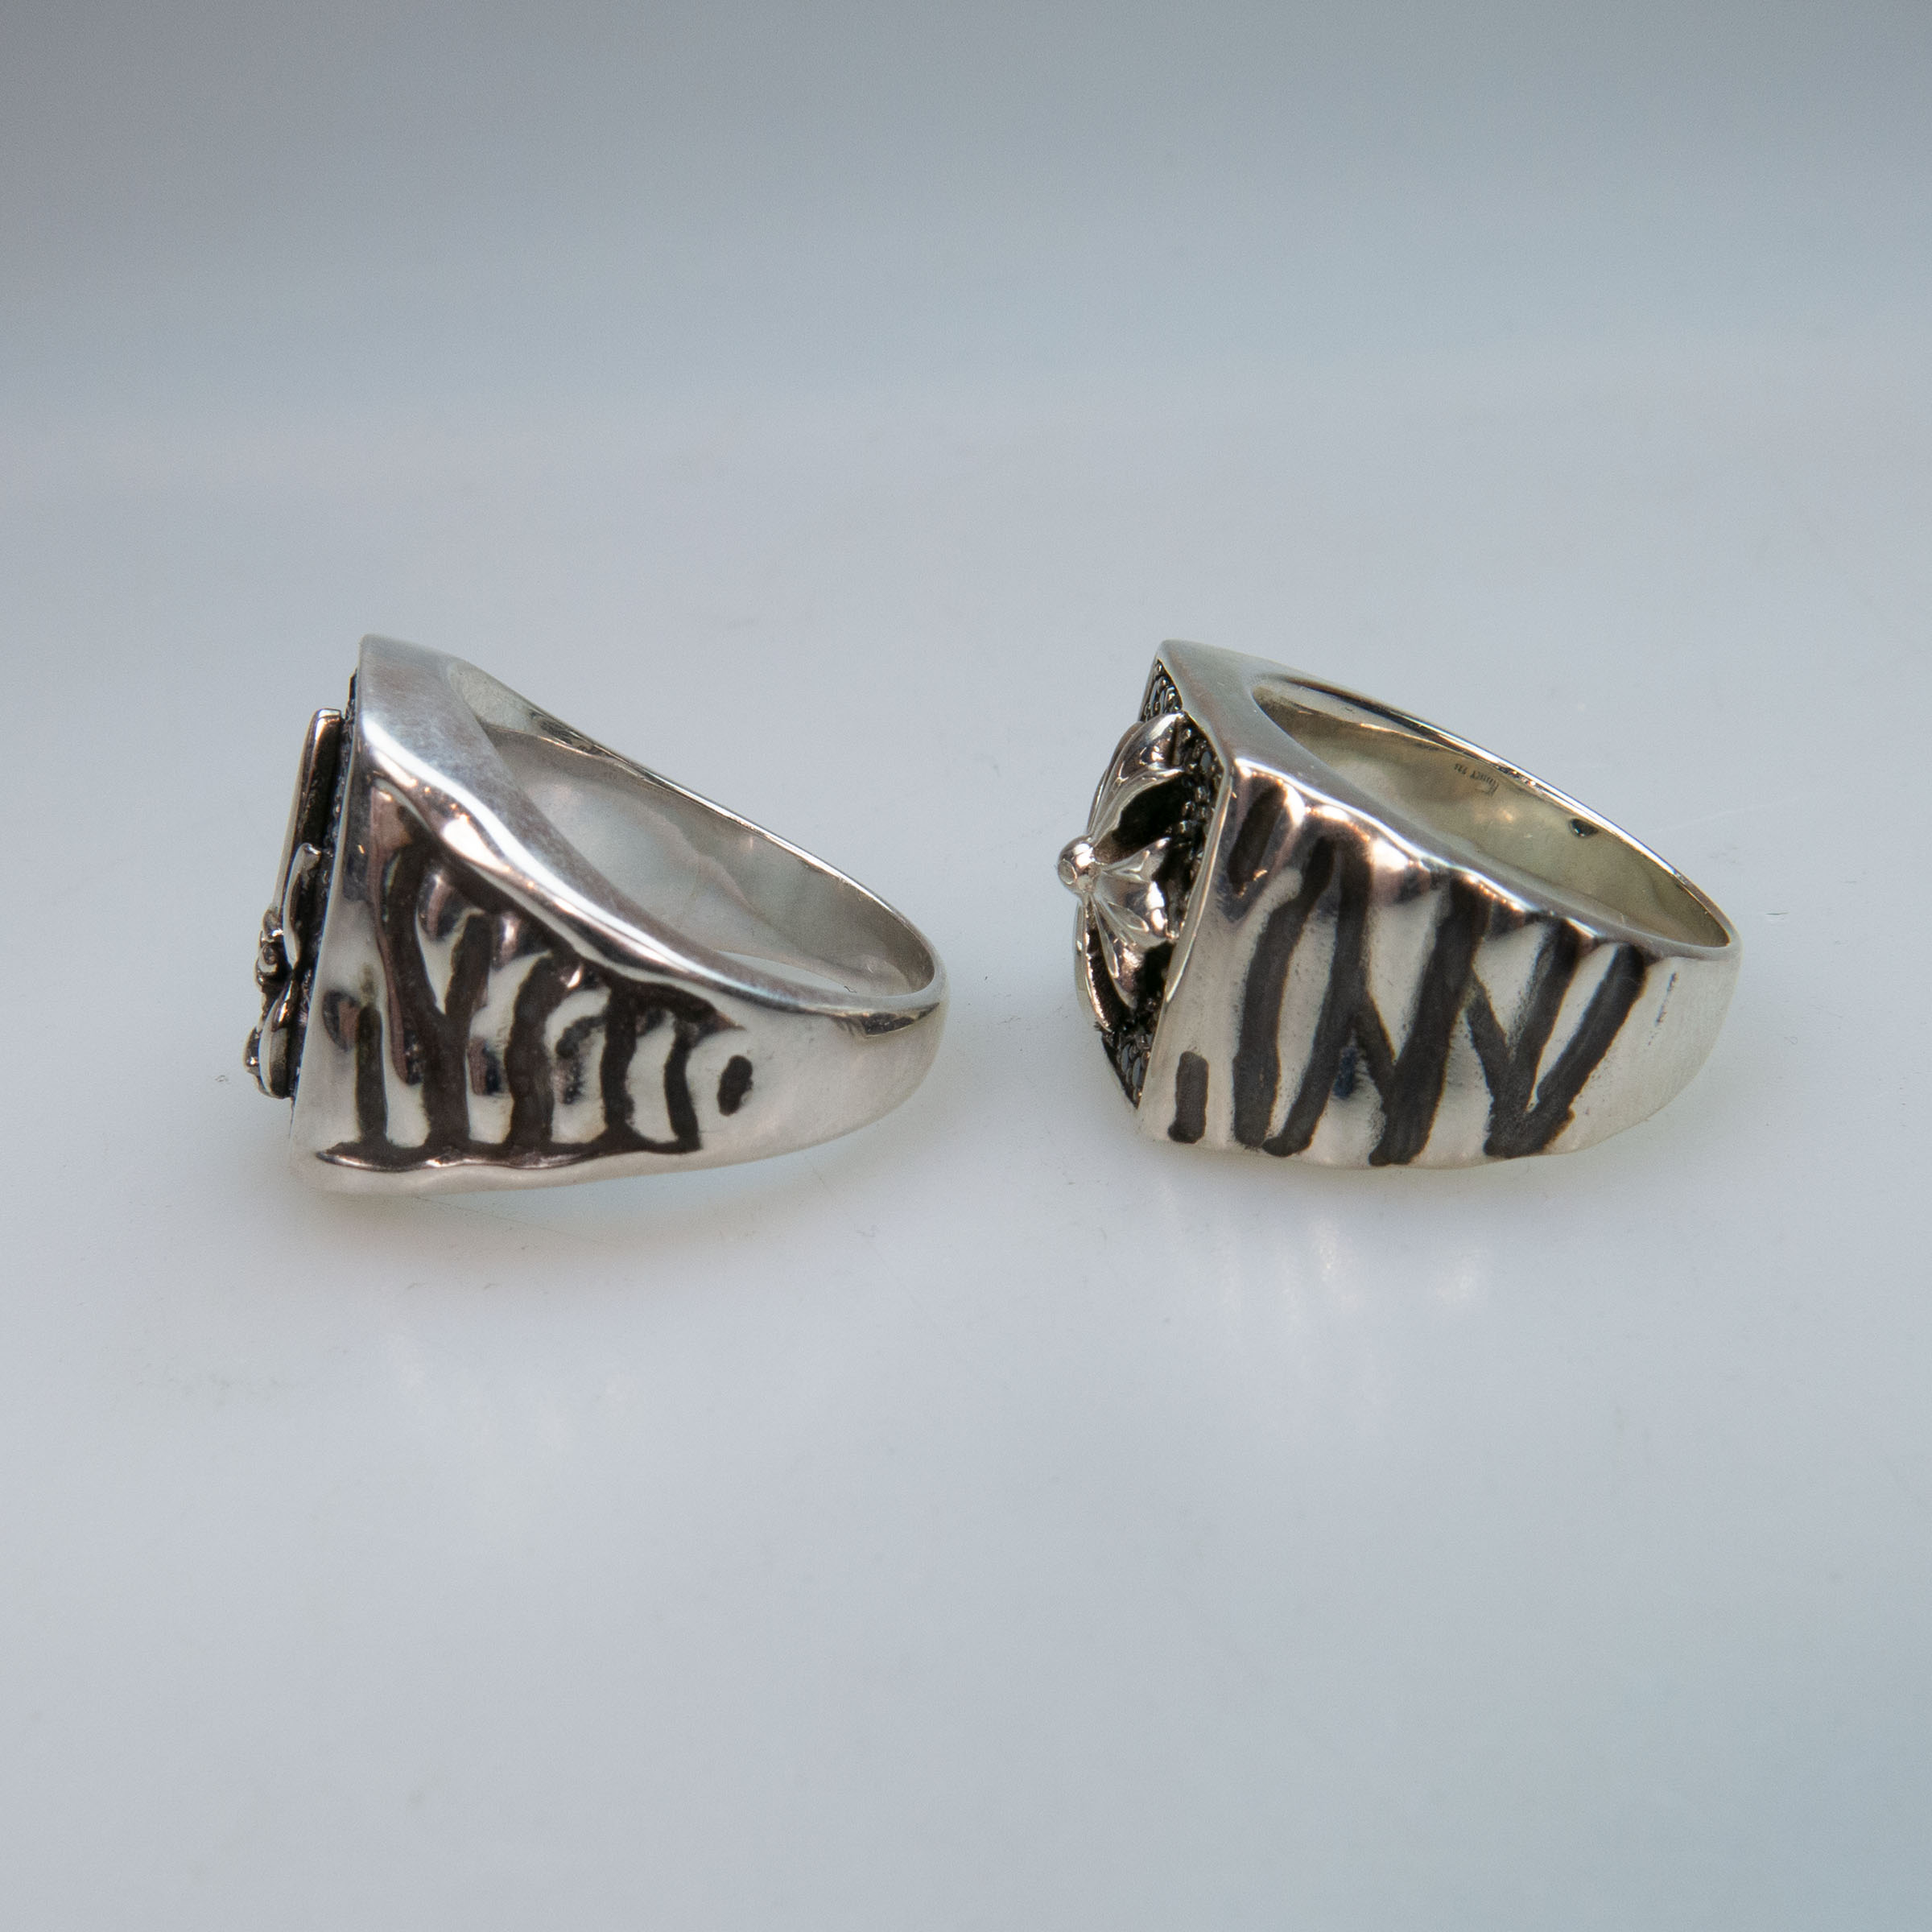 2 Men's Sterling Silver Rings